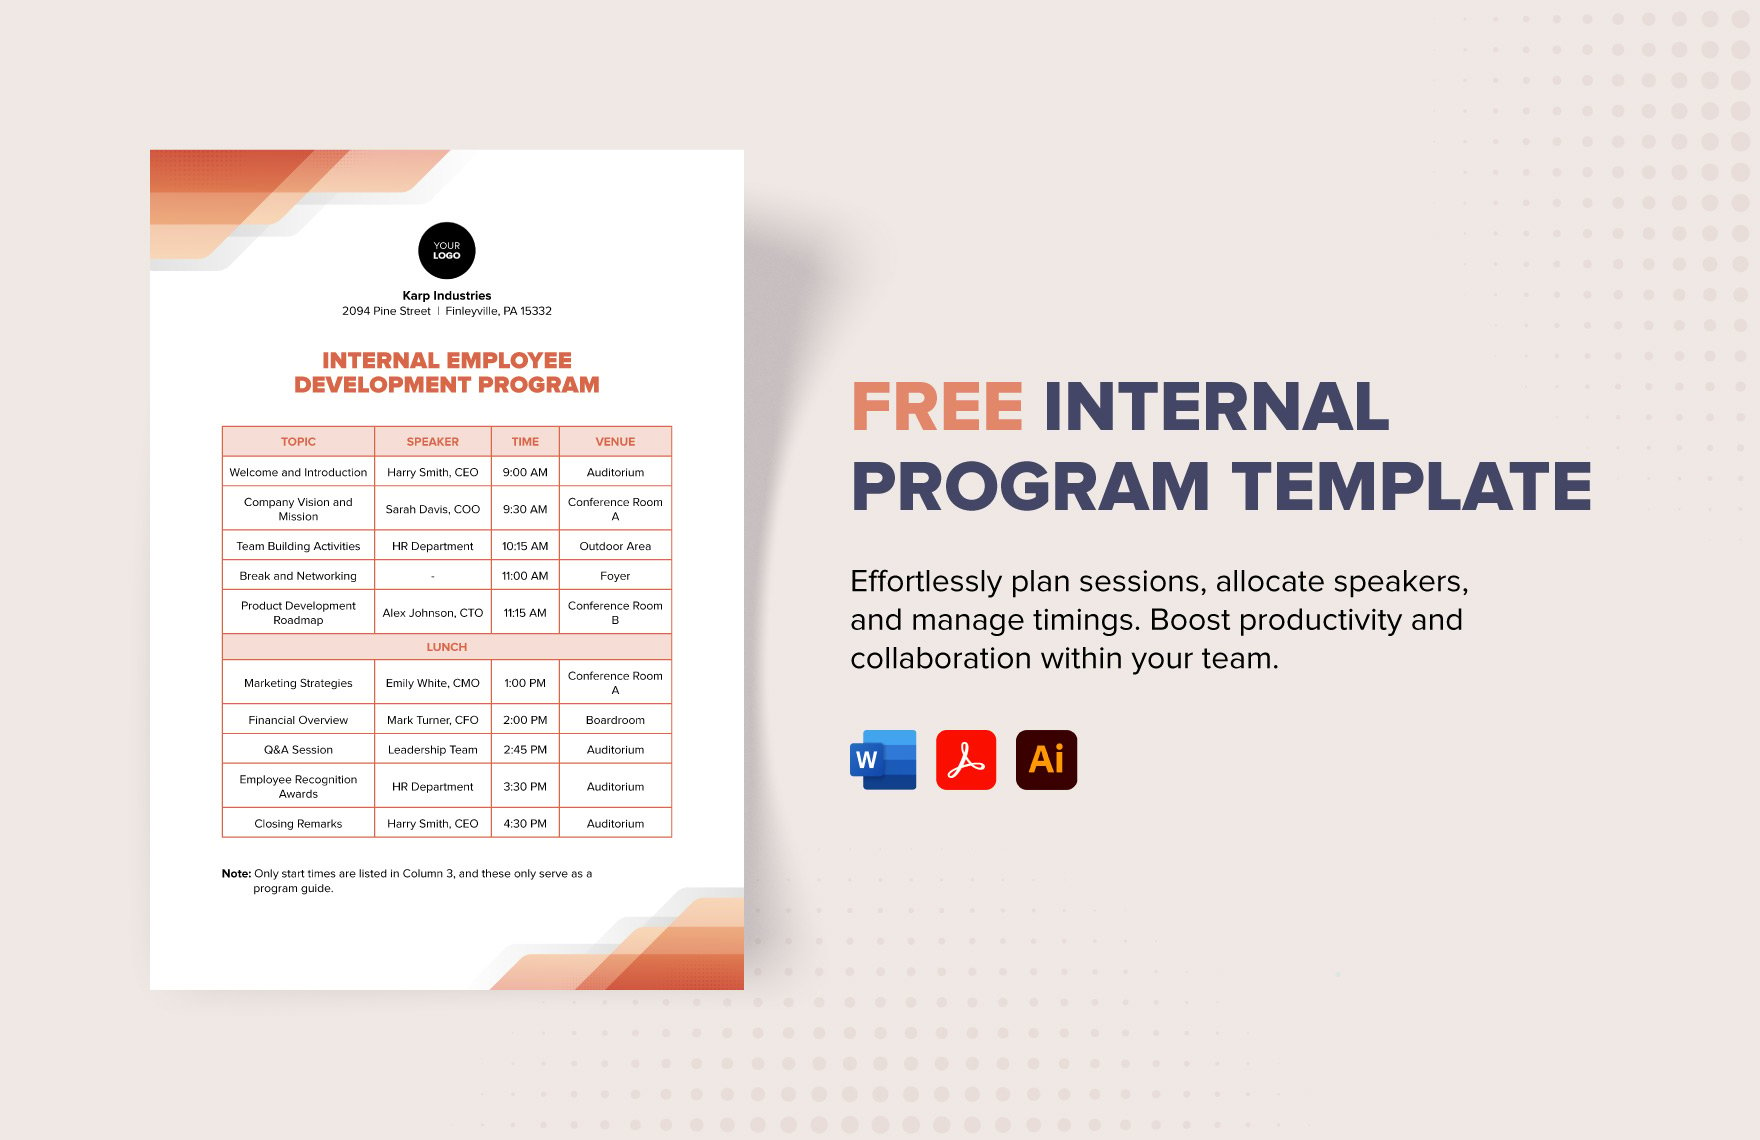 Free Internal Program Template